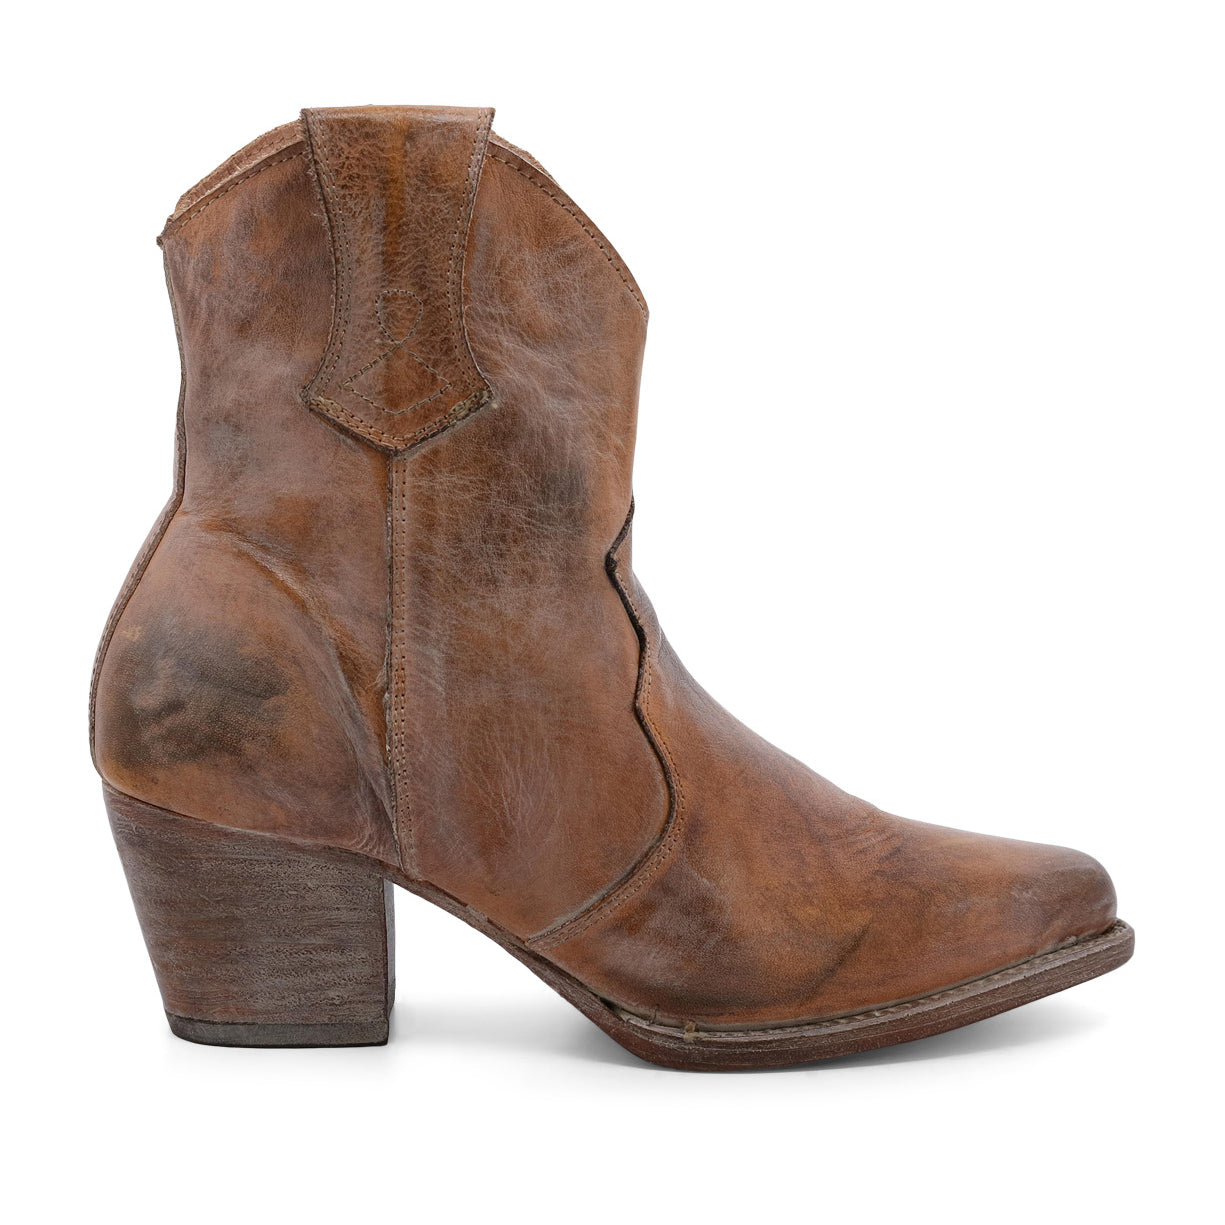 A women's Oak Tree Farms Baila cowboy boot with a wooden heel.